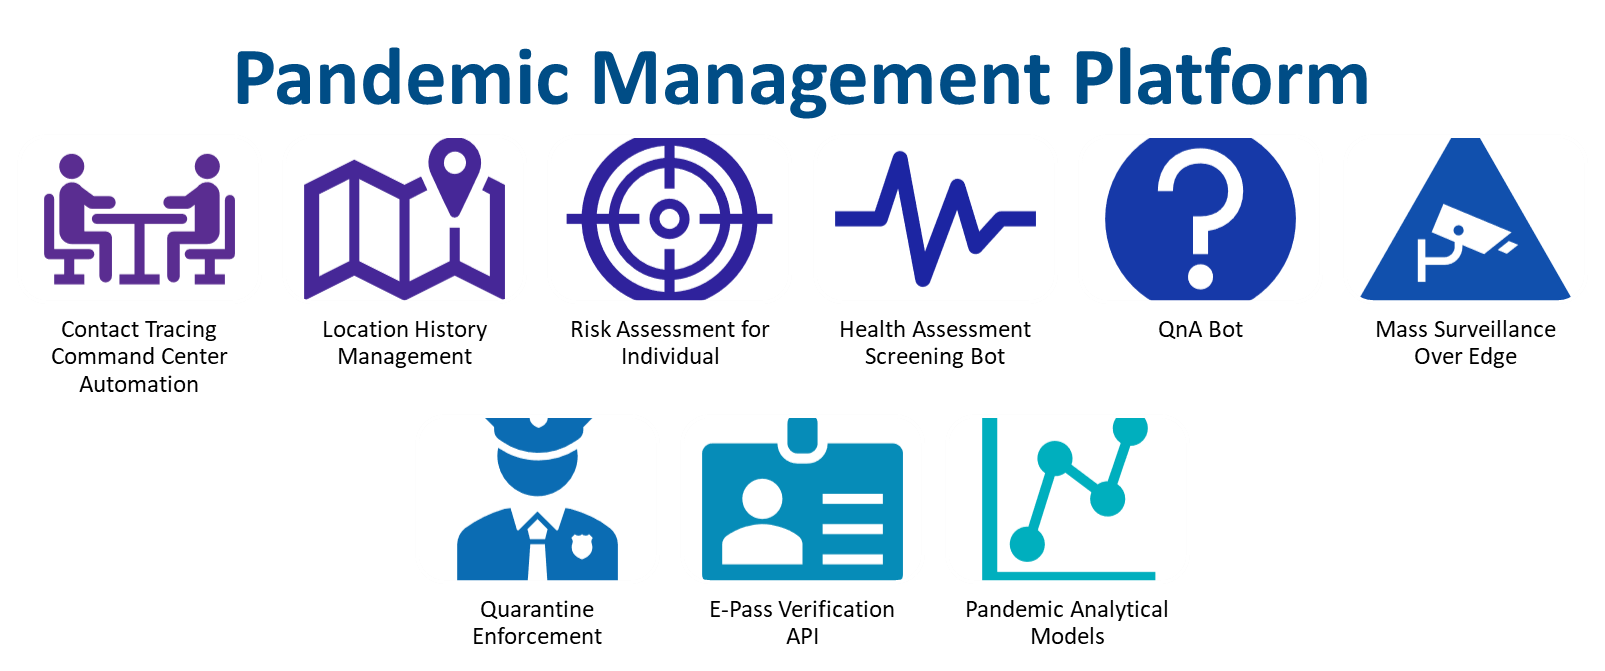 Pandemic Management Platform